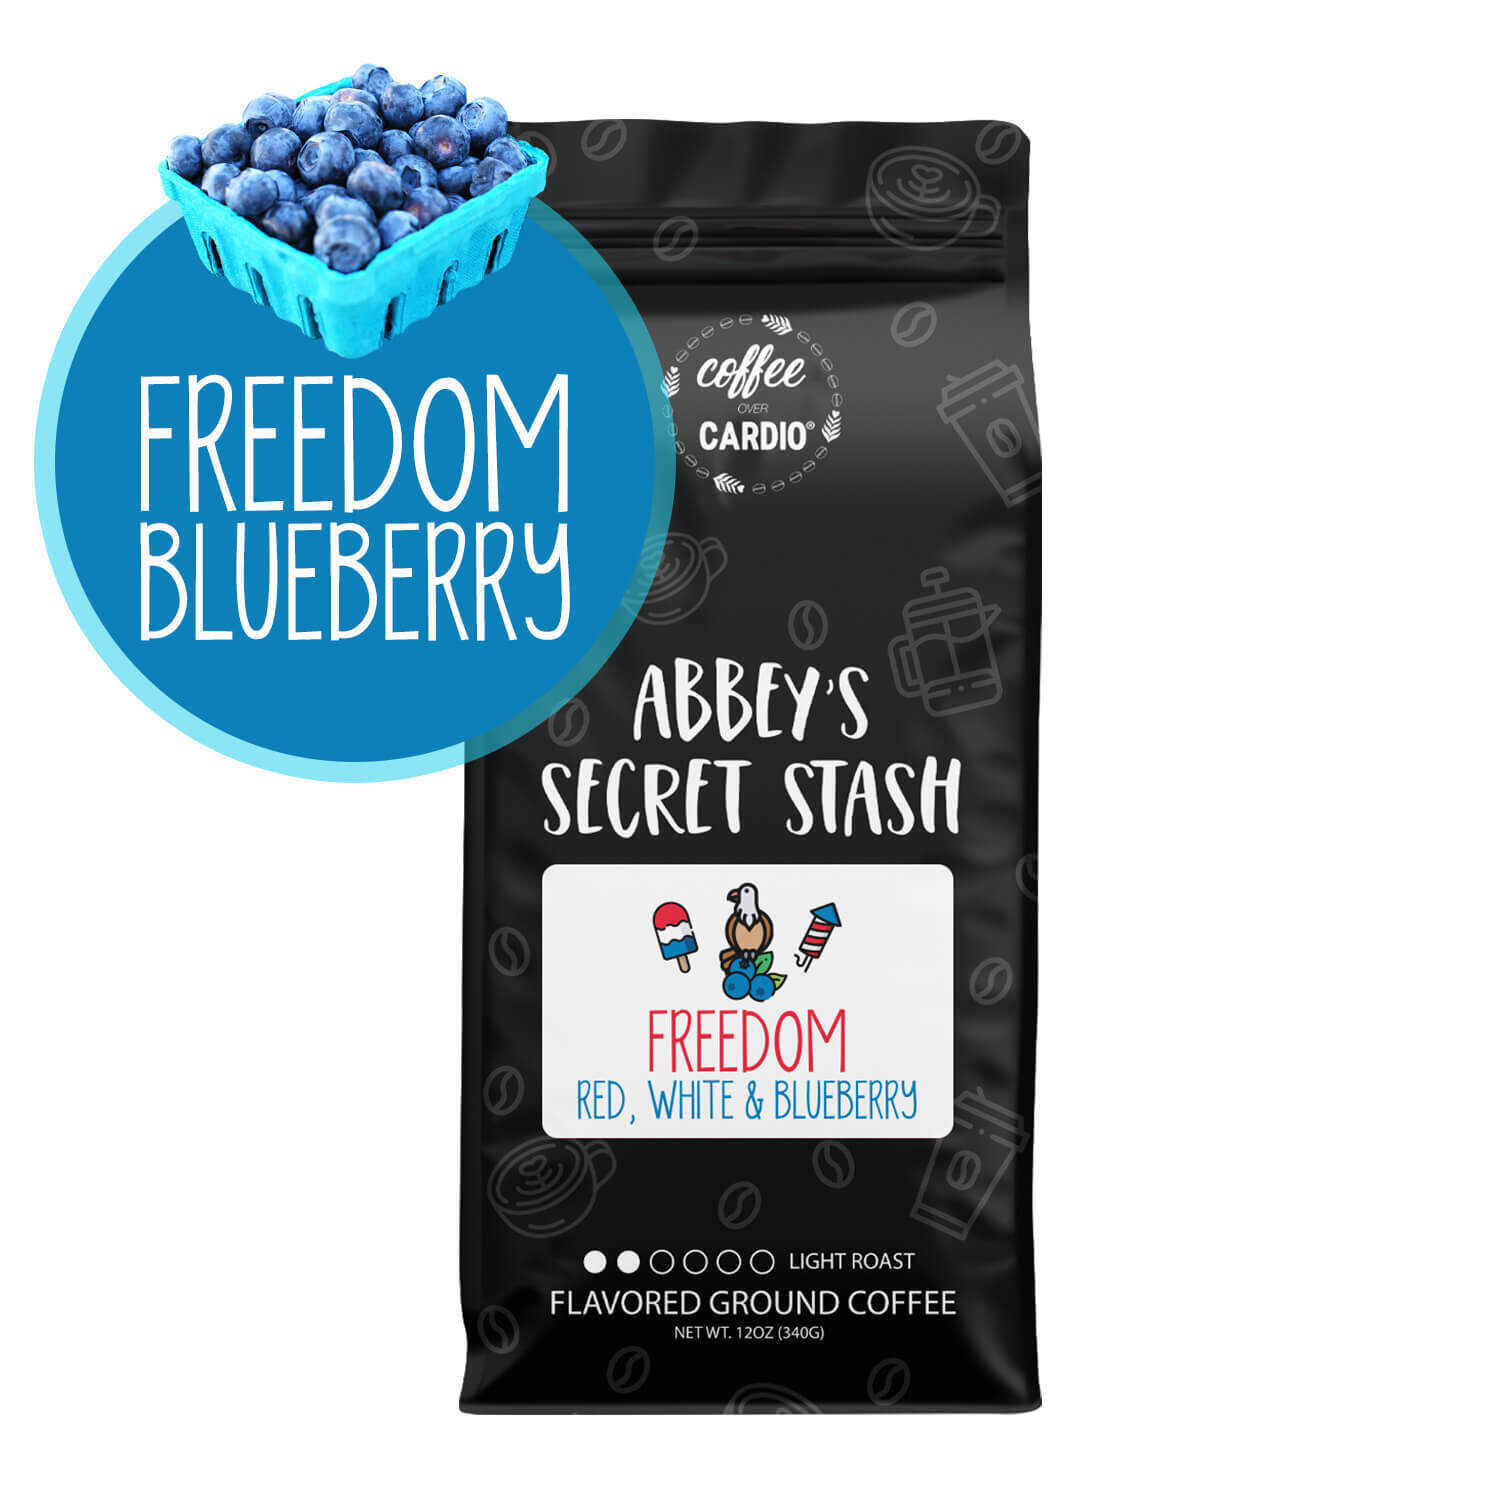 Coffee Over Cardio - Freedom Blueberry Coffee